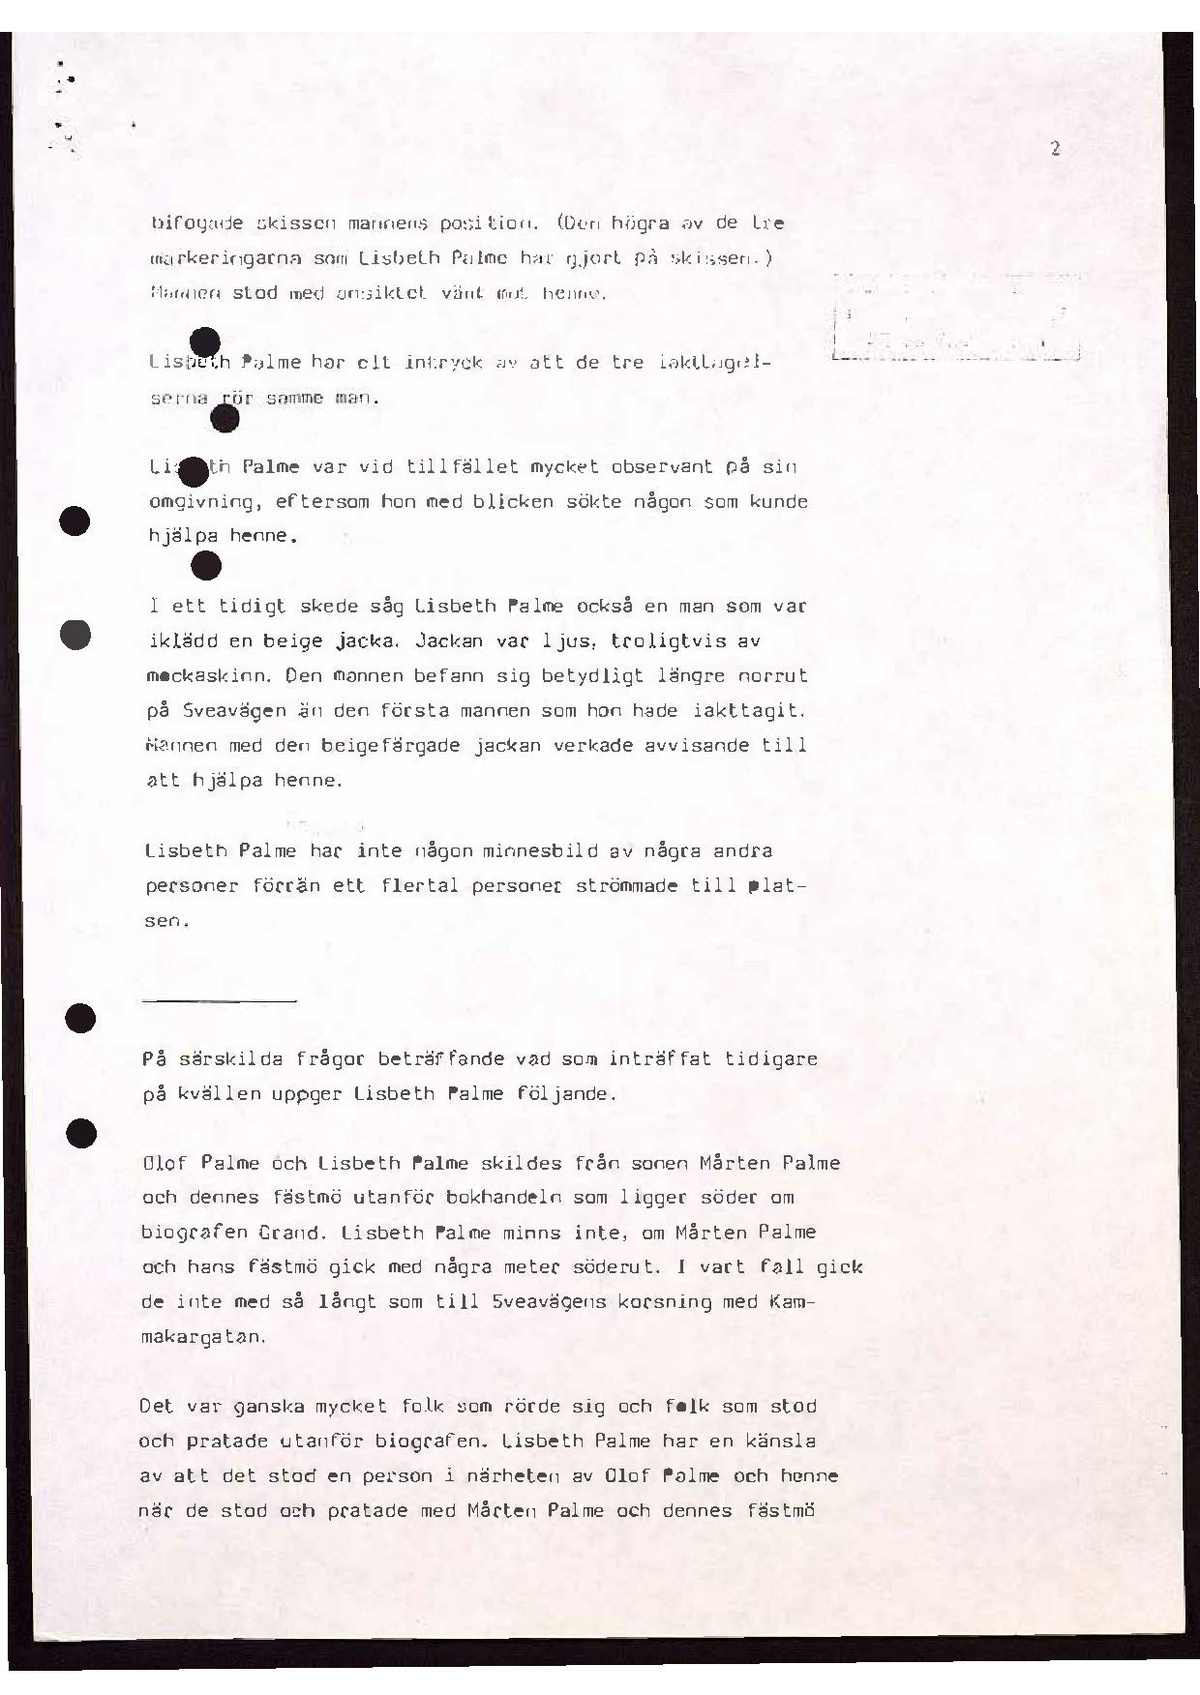 Pol-1989-01-26 1830-1940 T116-00-F Lisbeth Palme om gärningsmannen.pdf